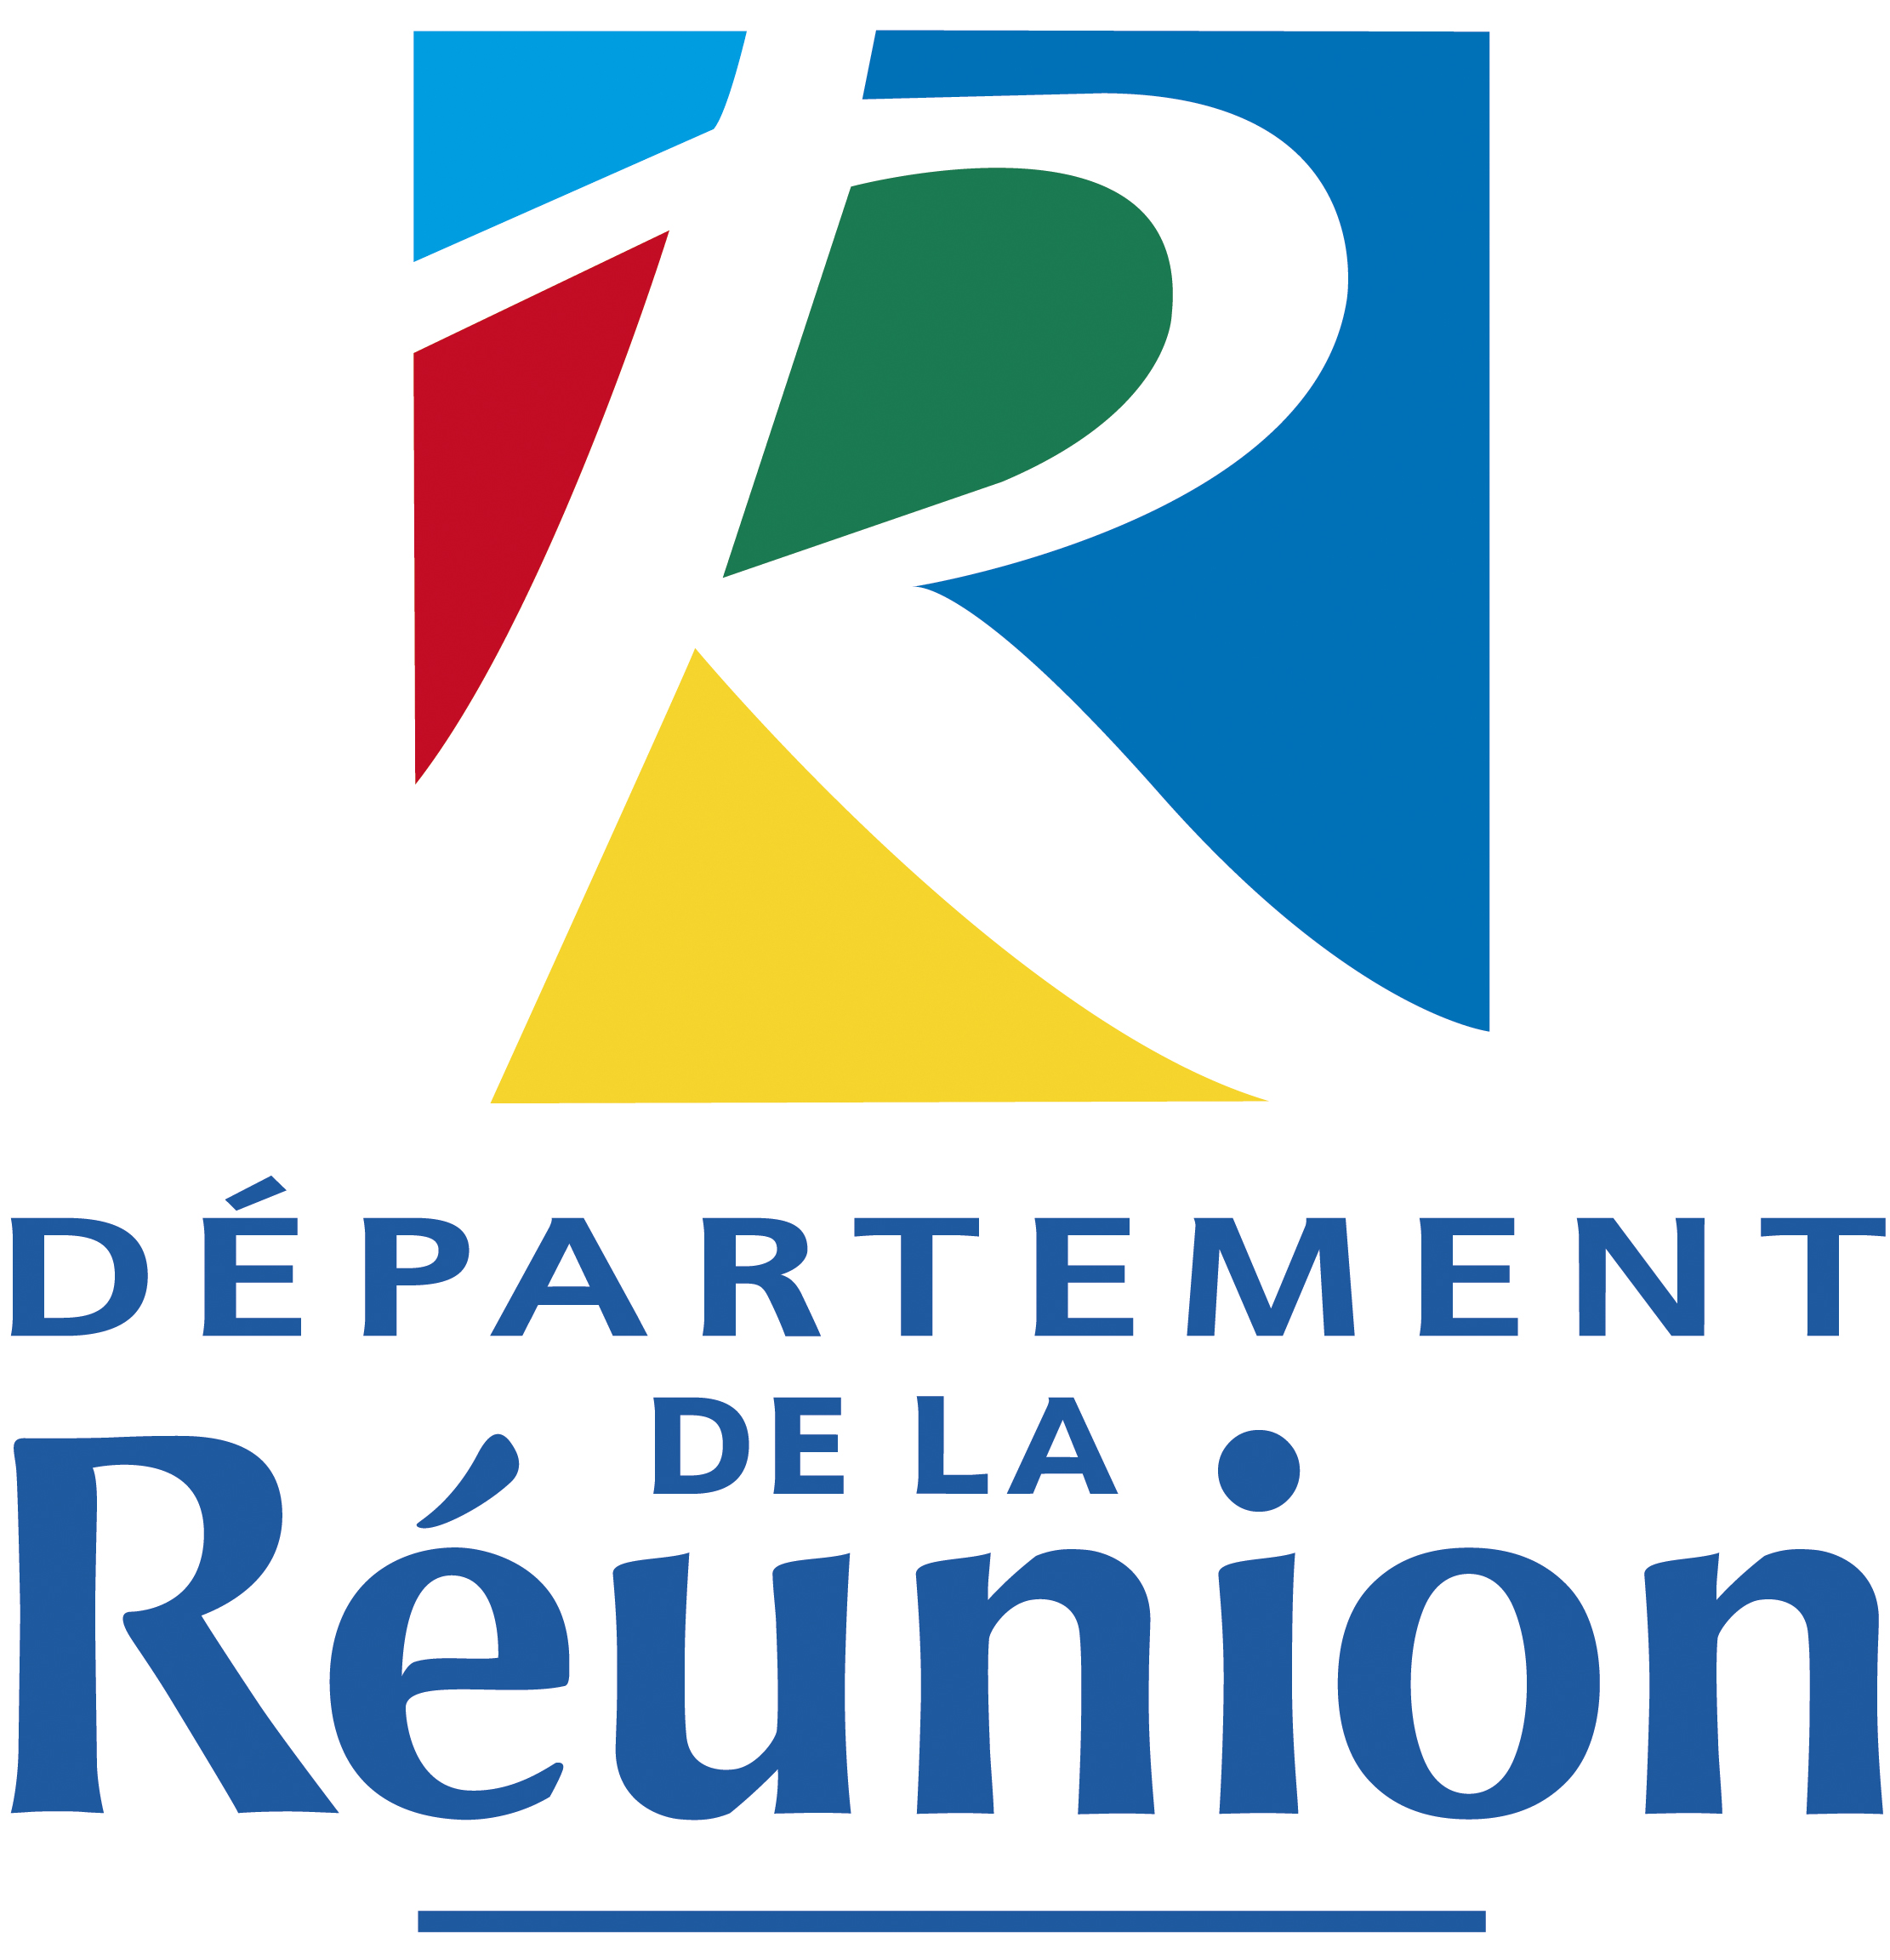 2,032 Reunion Logo Images, Stock Photos, 3D objects, & Vectors |  Shutterstock